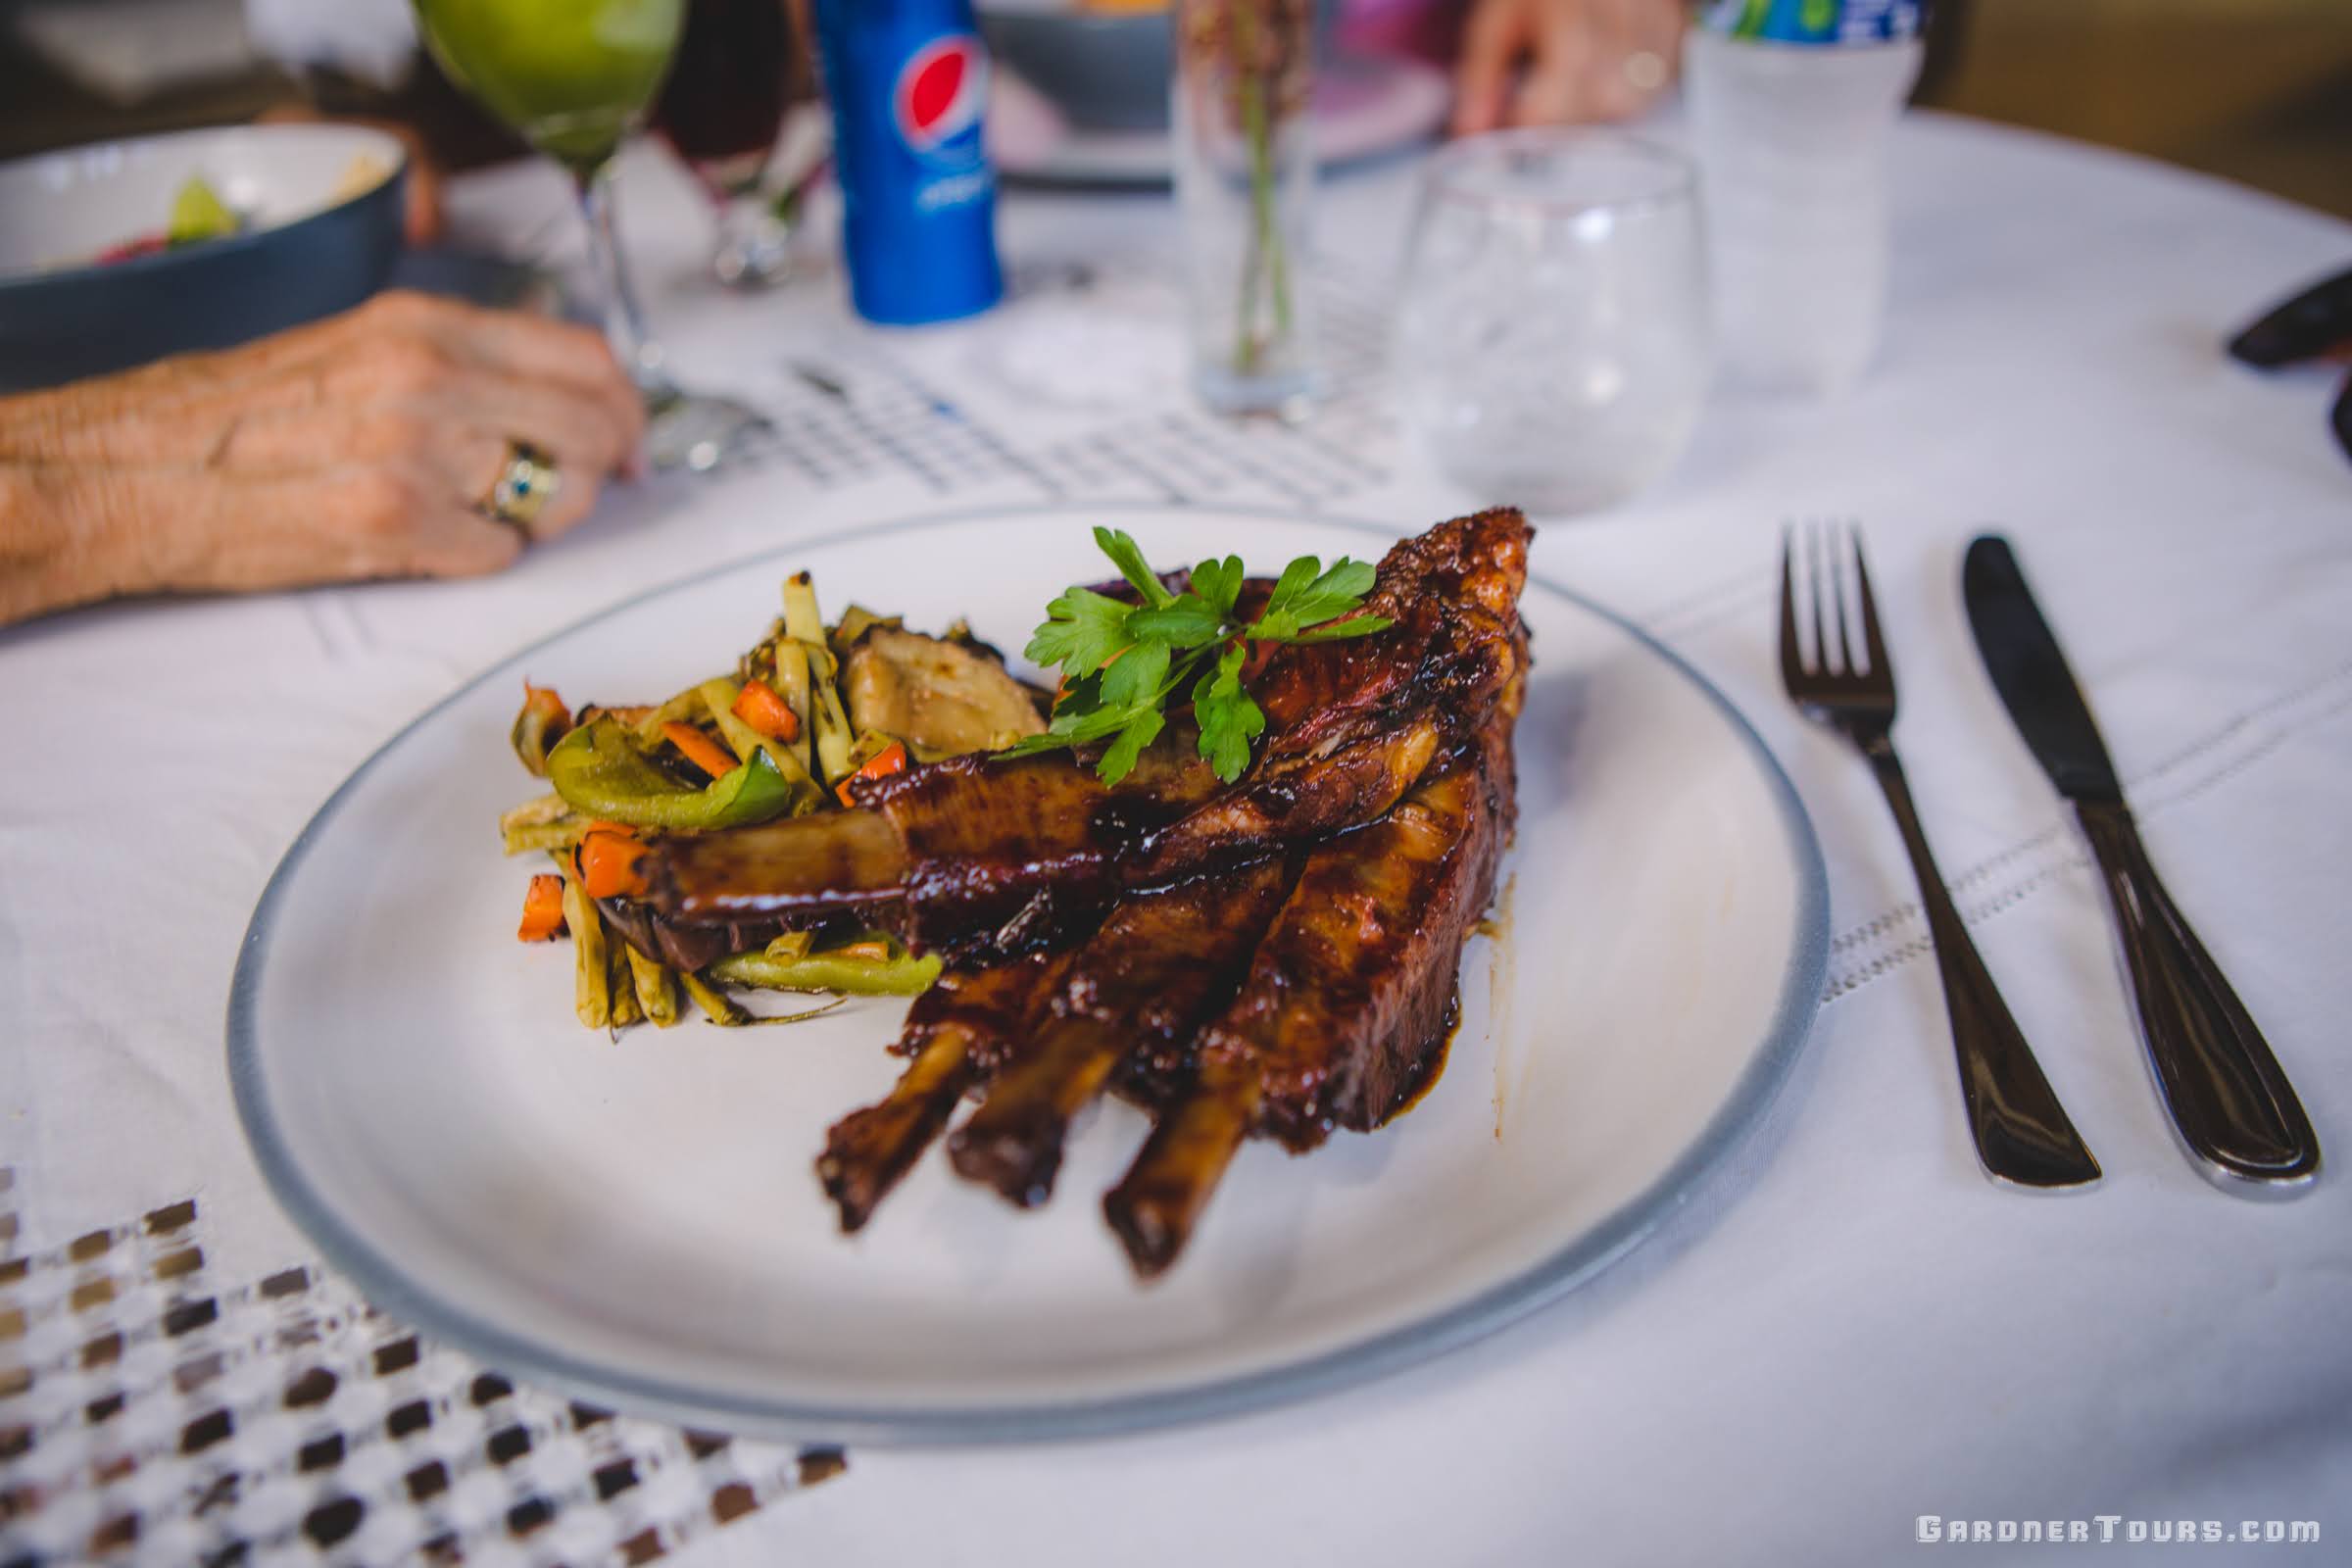 Delicious Cuban BBQ Pork Ribs with Sauteed Vegetables at 5-Star Restaurant Paladar La Bodega in Vedado, Havana, Cuba